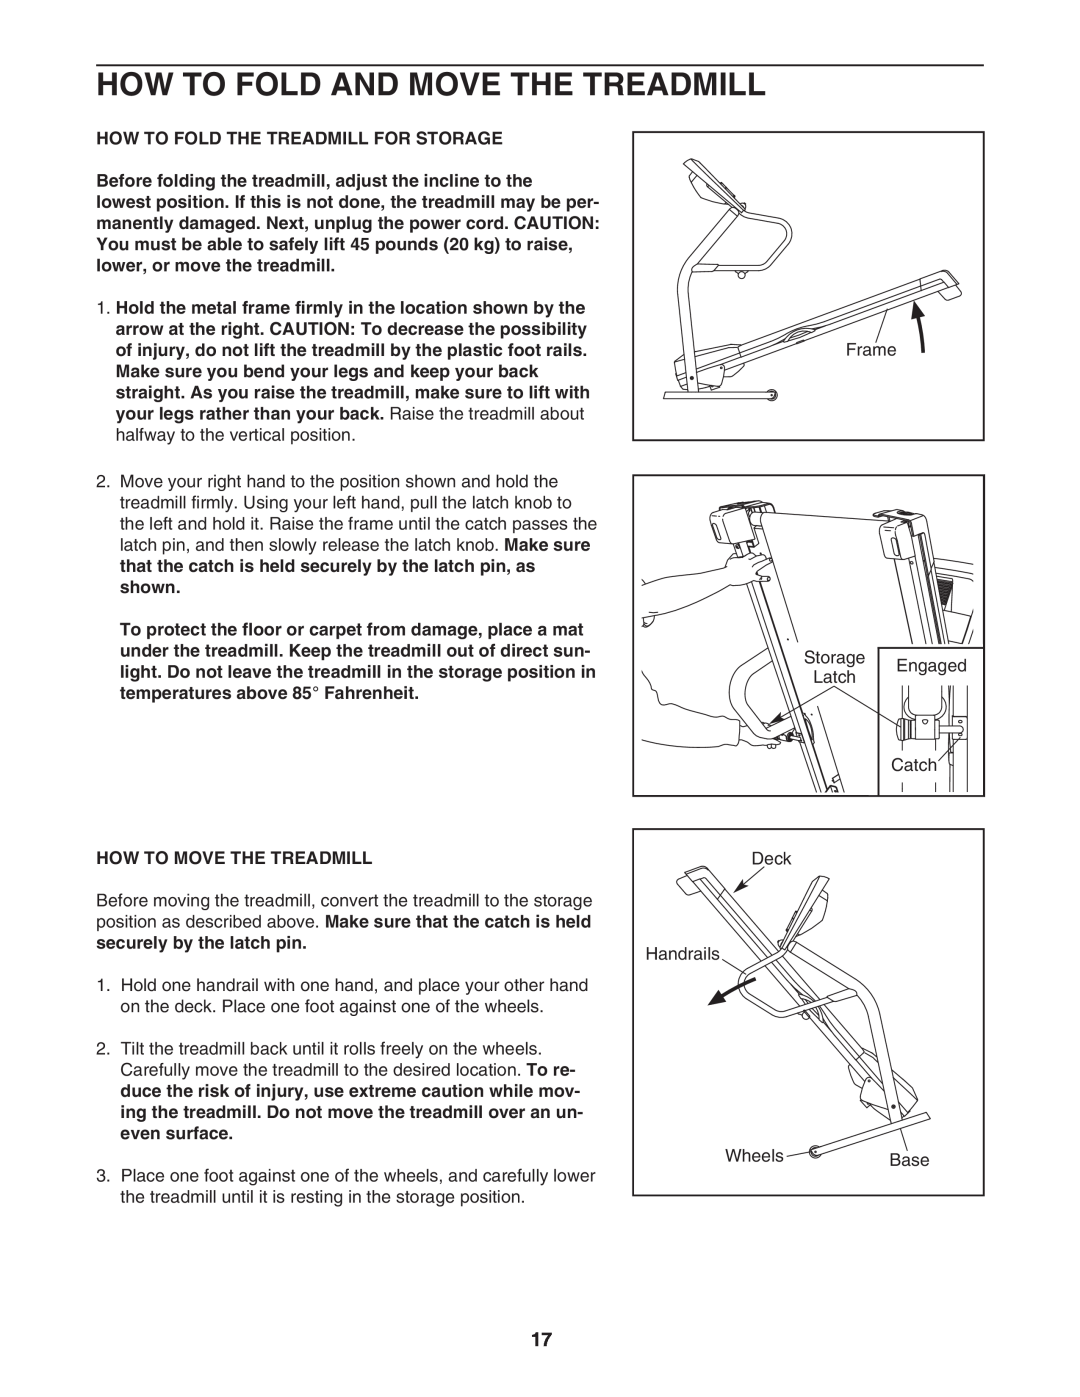 Image IMTL49105.0 How To Fold And Move The Treadmill, How To Fold The Treadmill For Storage, How To Move The Treadmill 